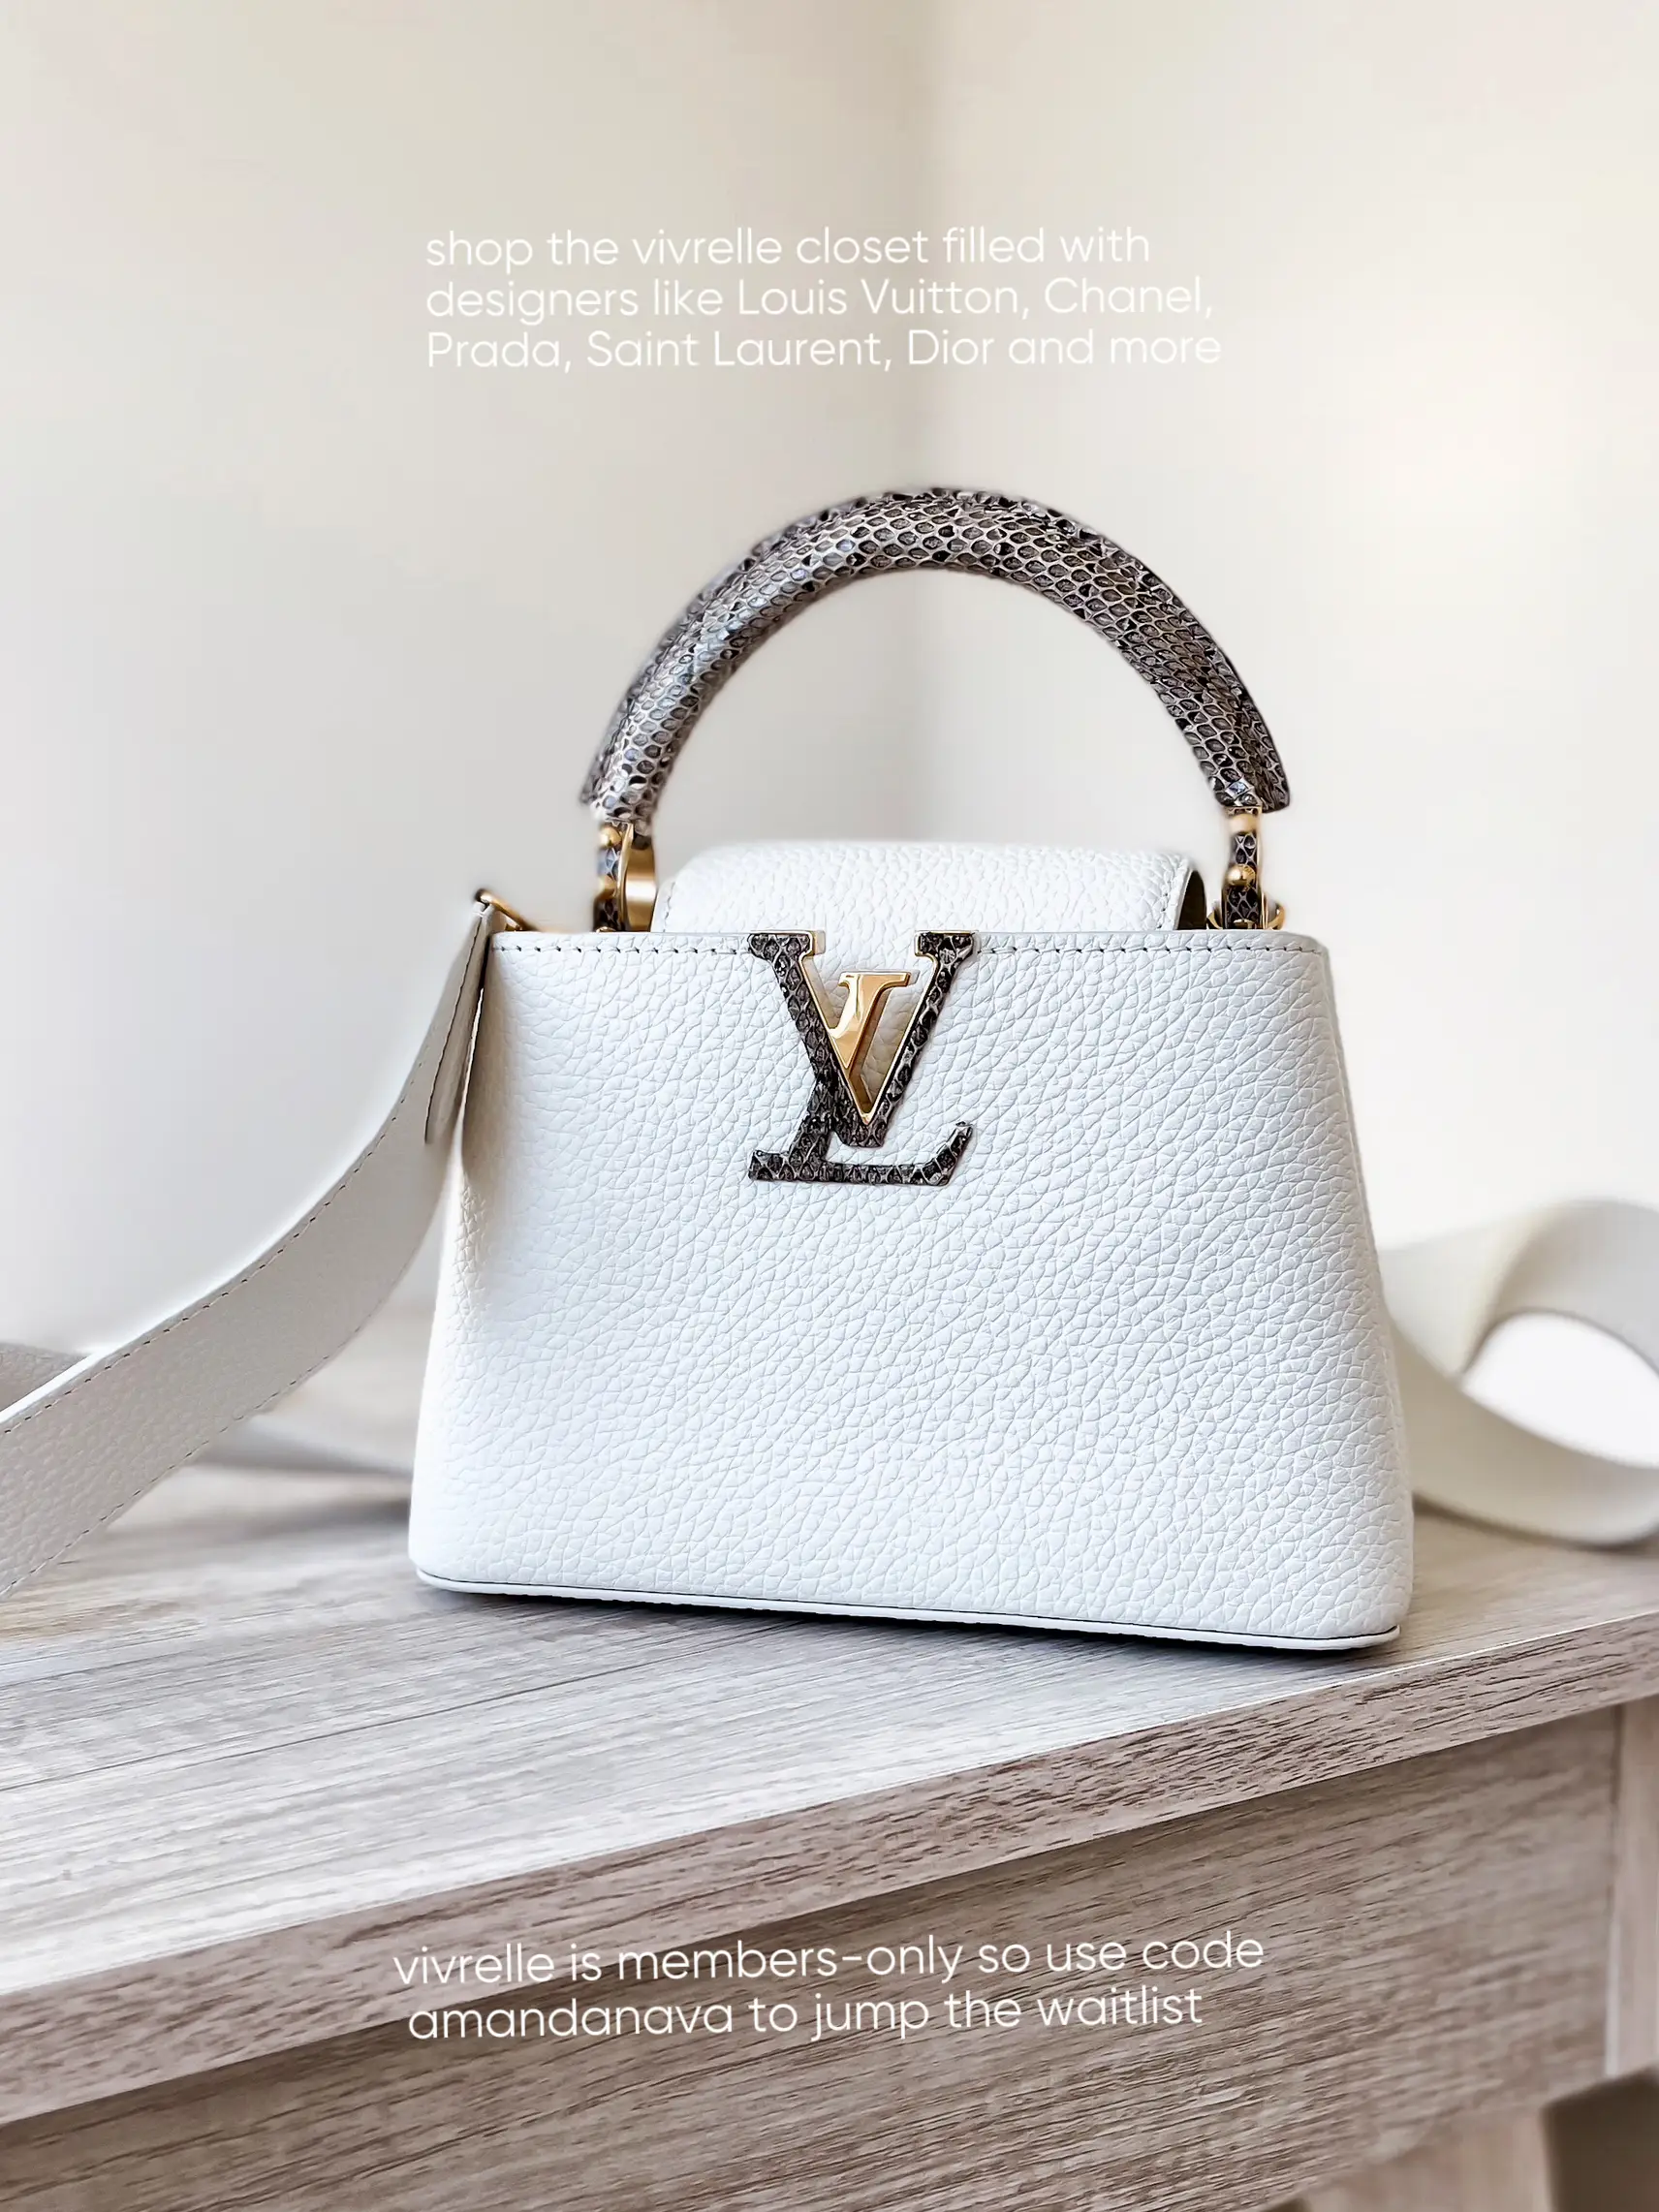 Vivrelle is The Hottest New Way to Borrow Designer Handbags